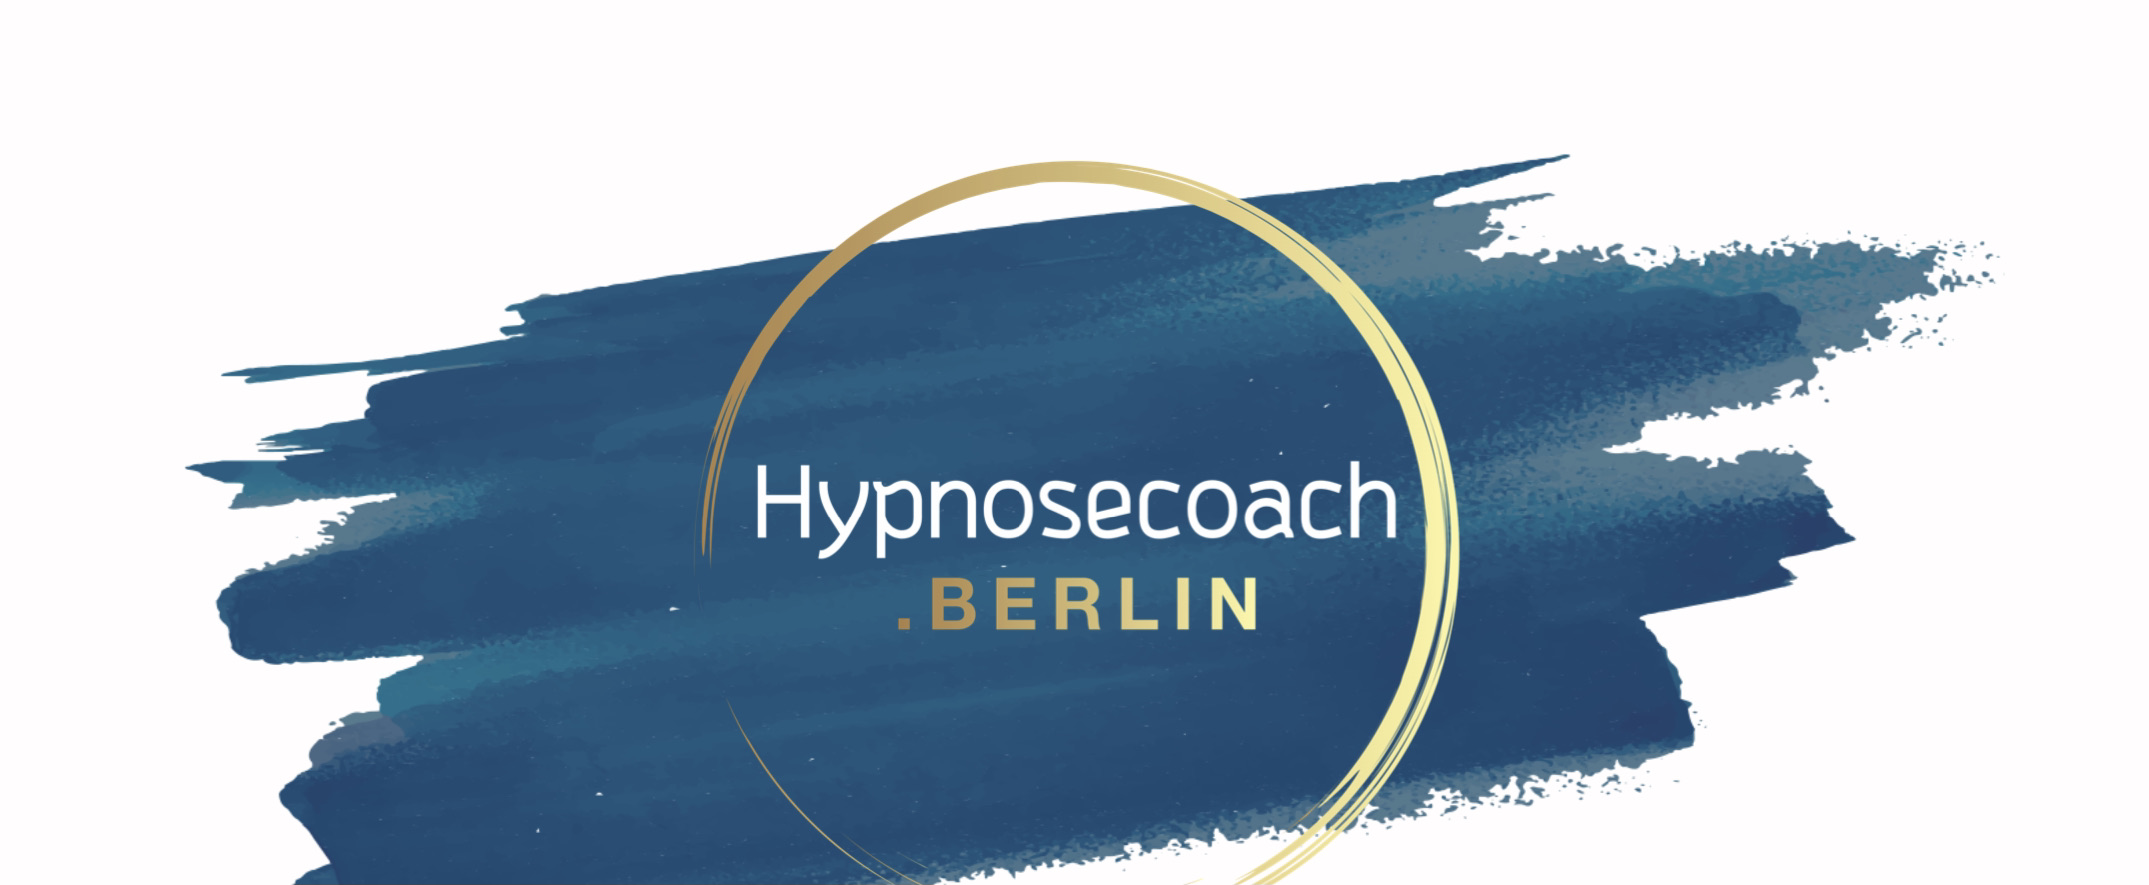 (c) Hypnosecoach.berlin